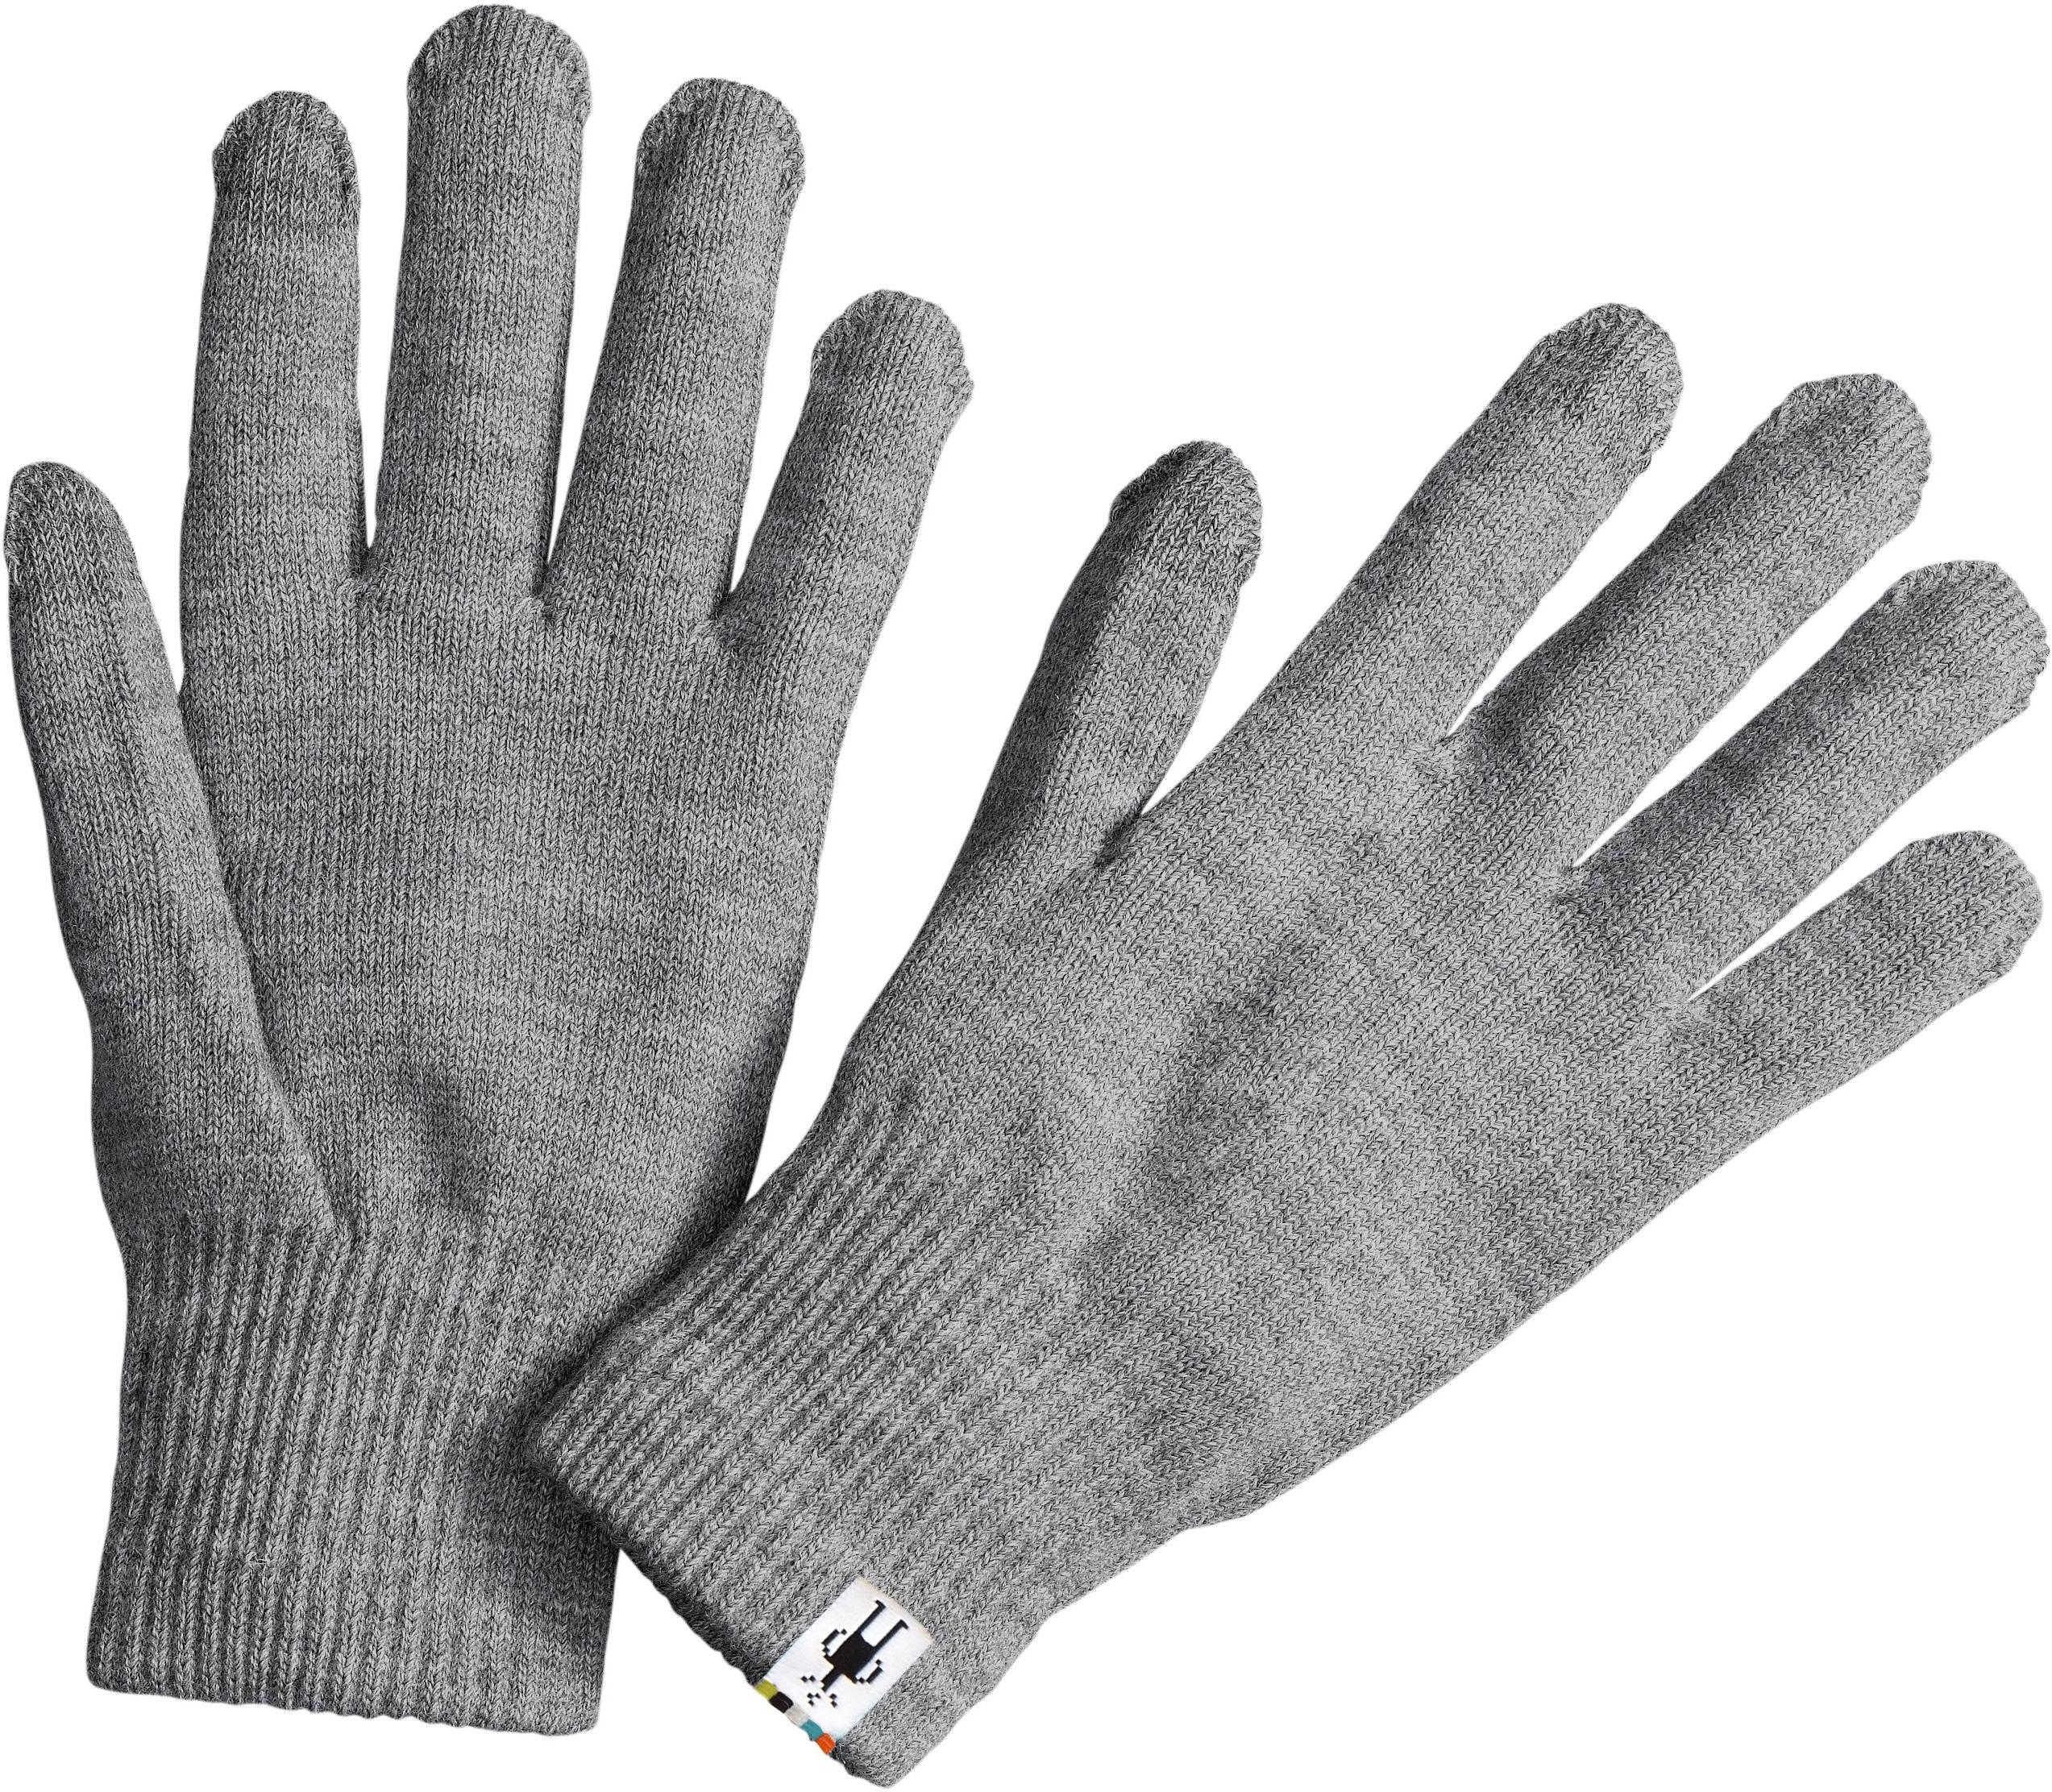 Smartwool Liner Glove S